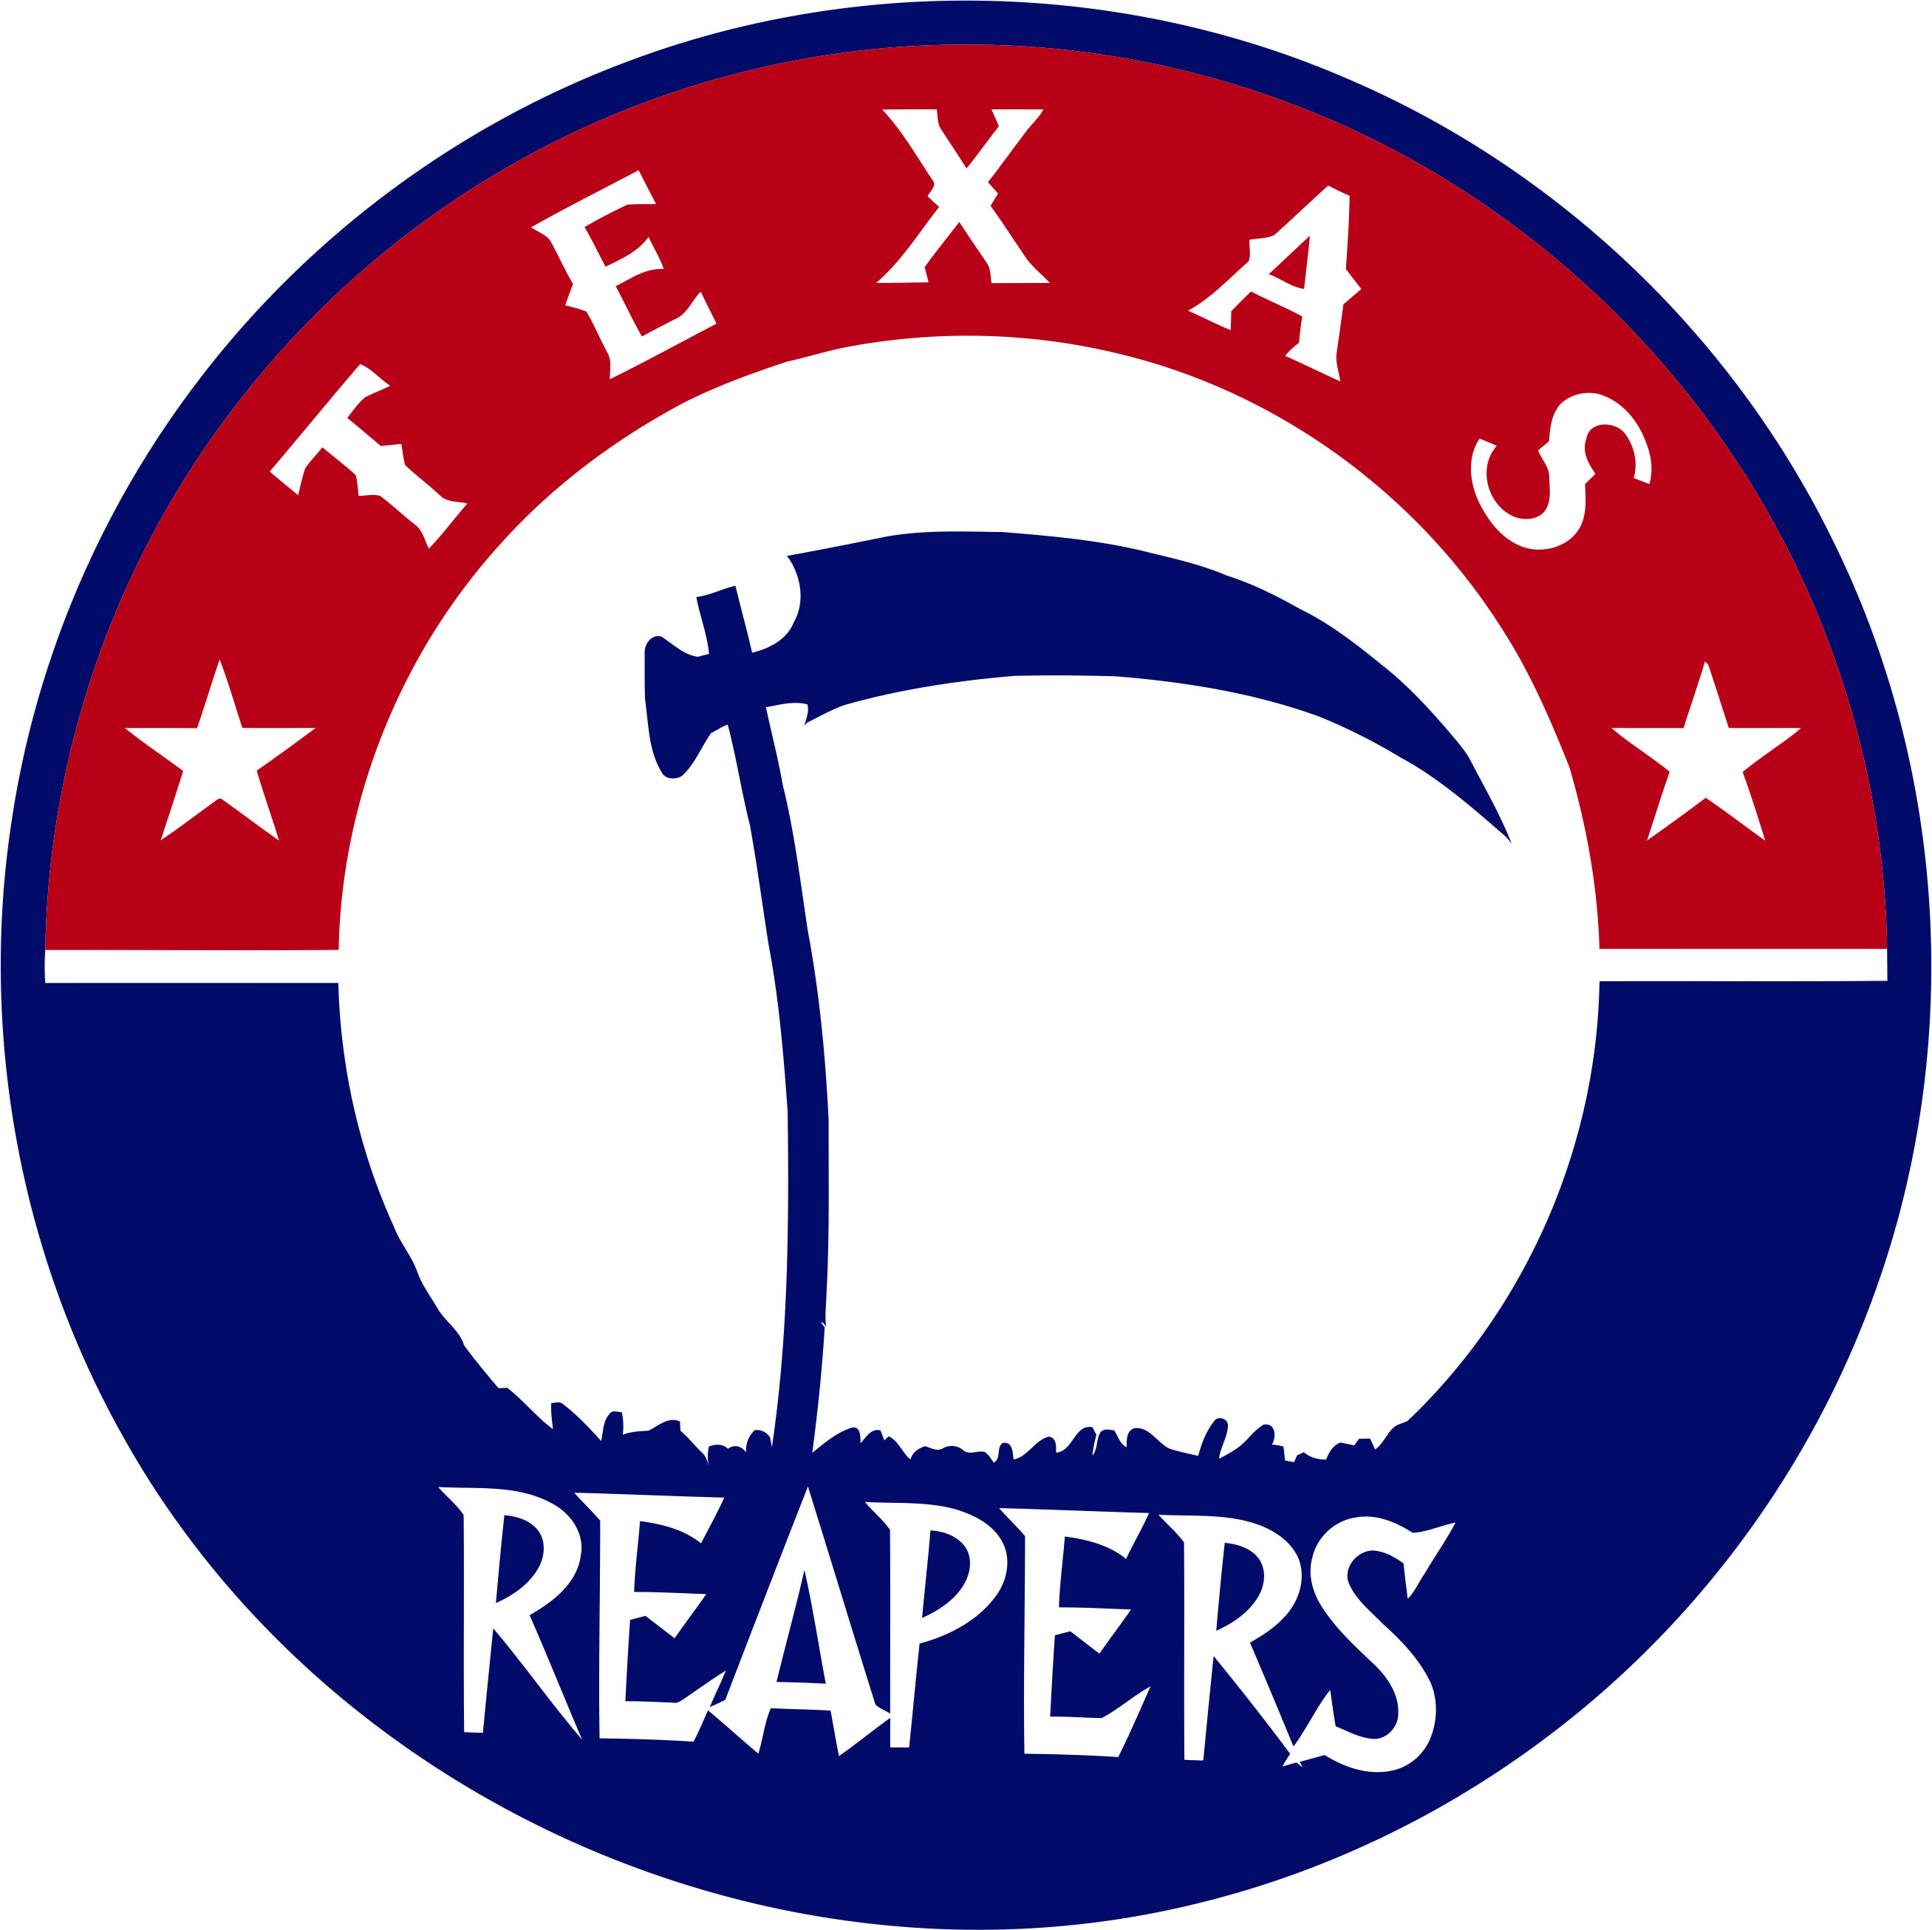 Texas Rangers Reapers Logo fabric transfer